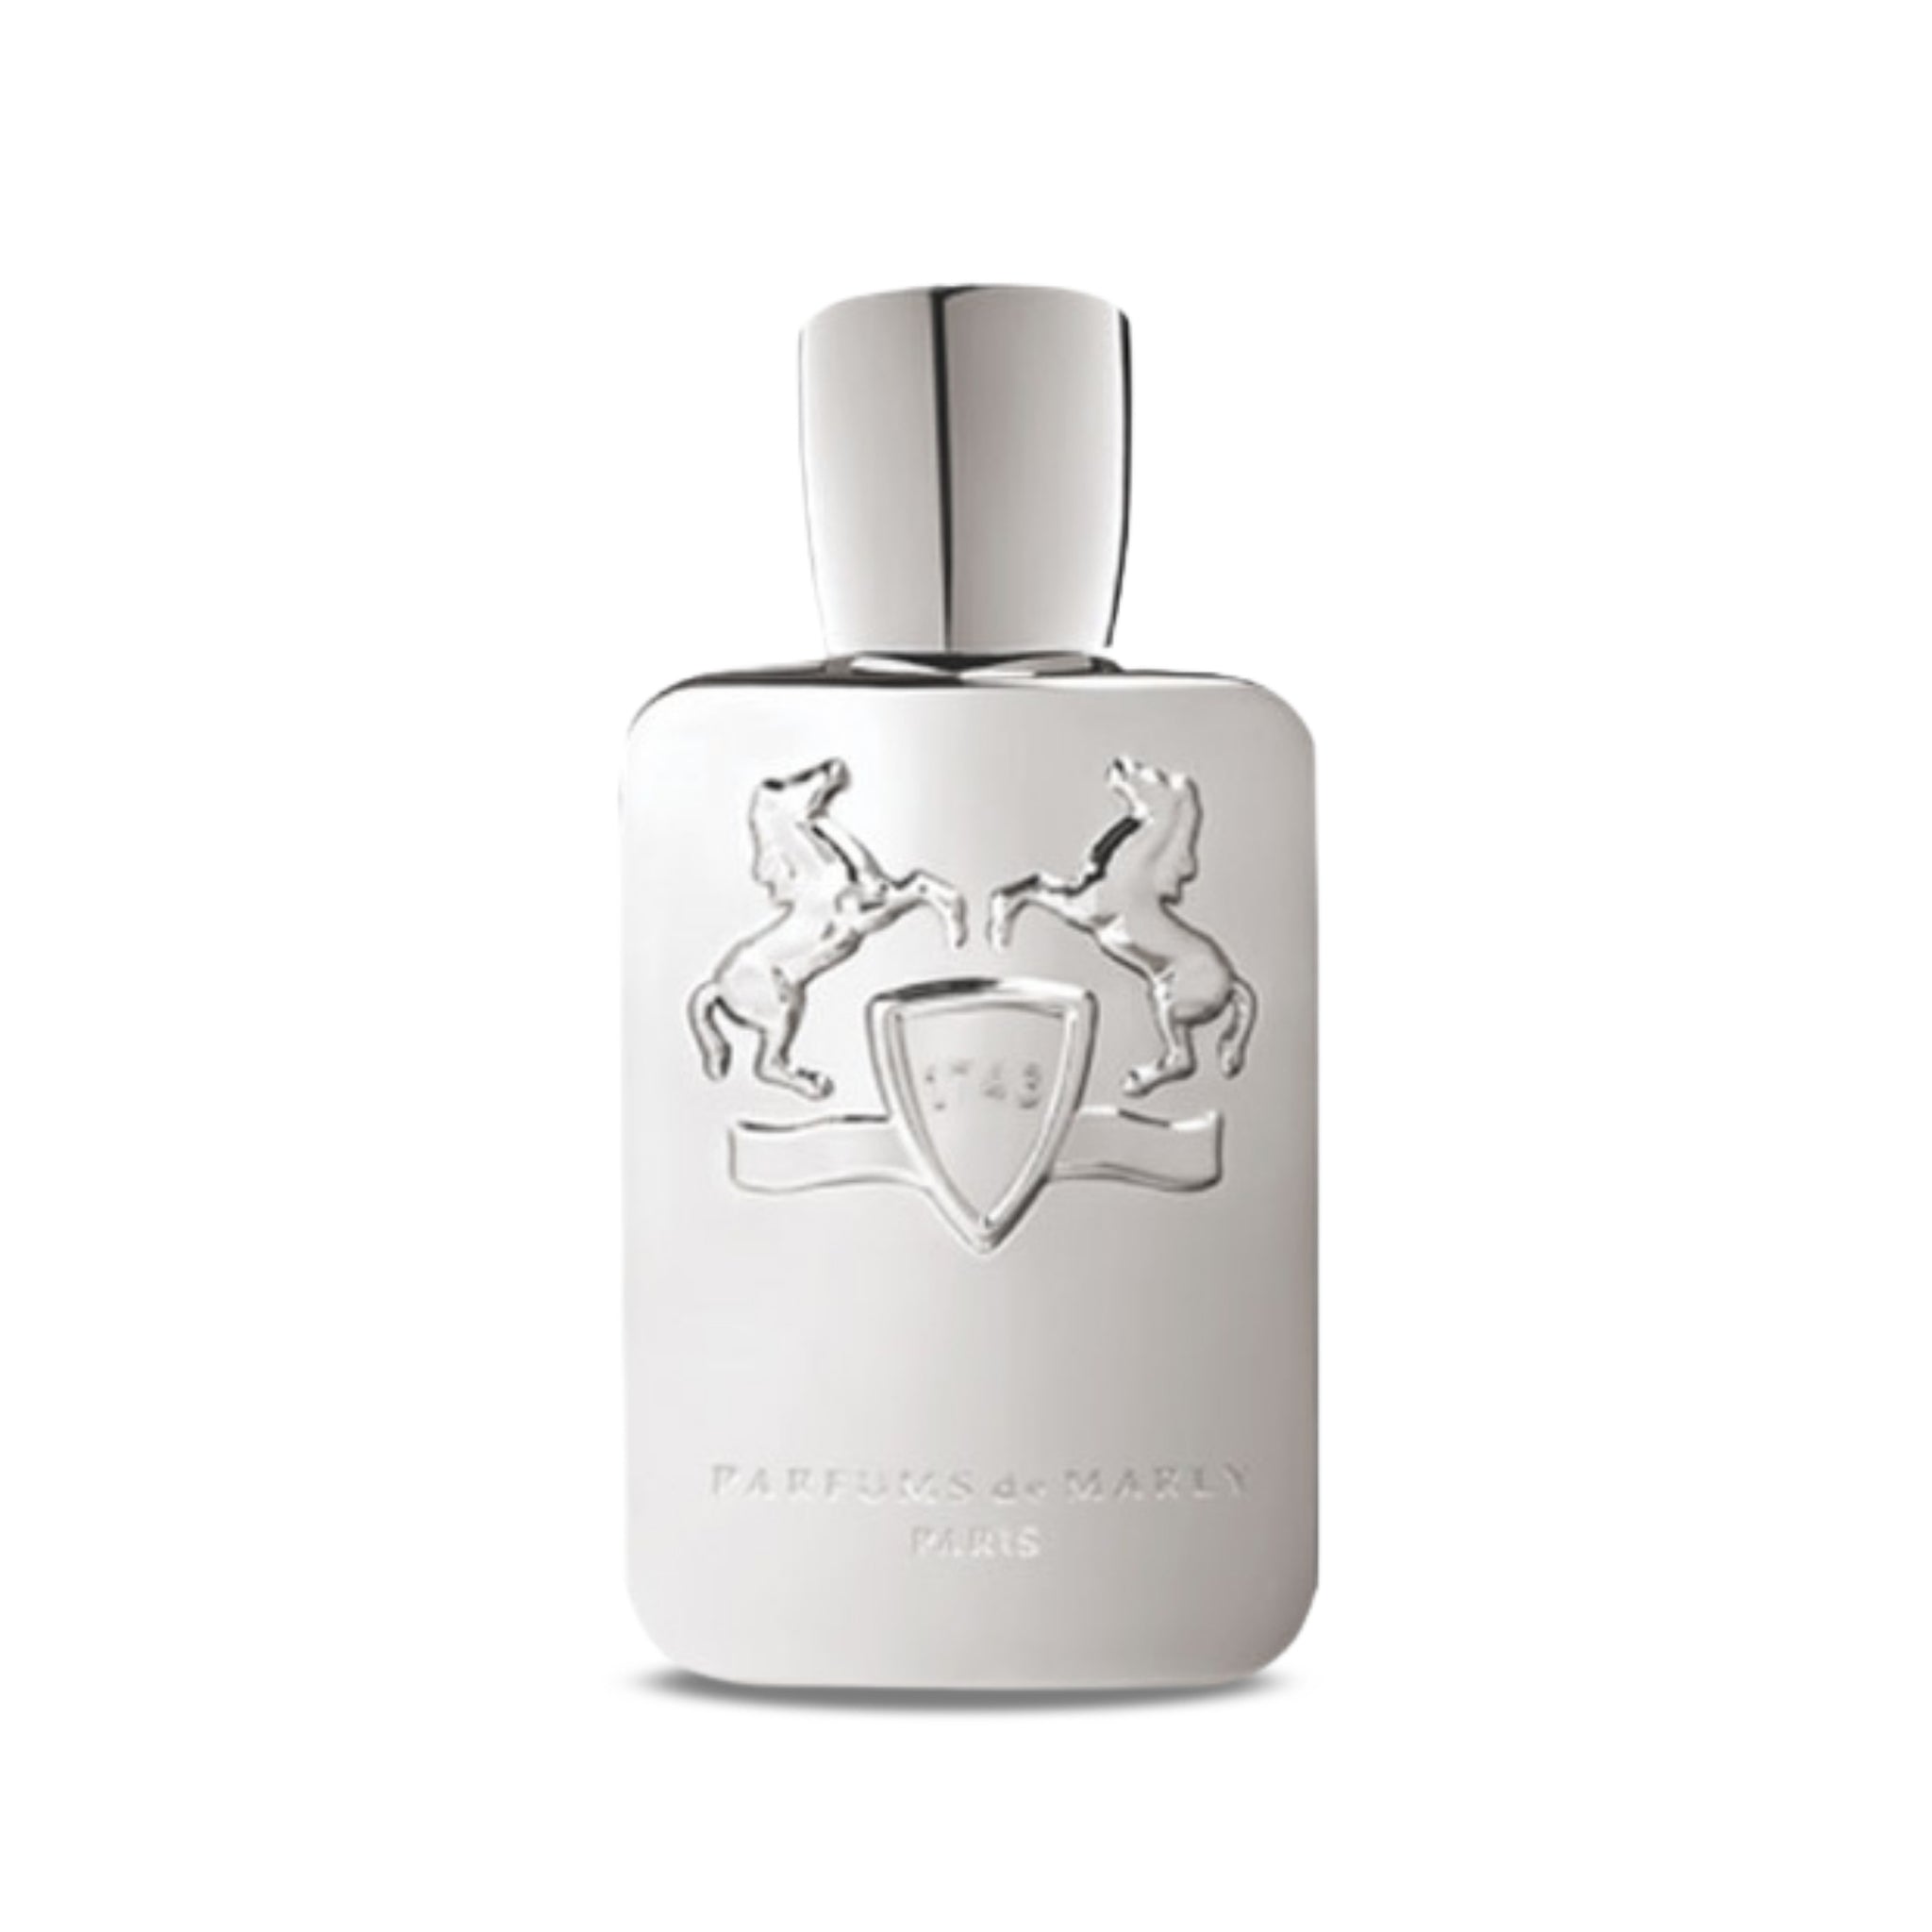 Pegasus EDP Parfum de Marly